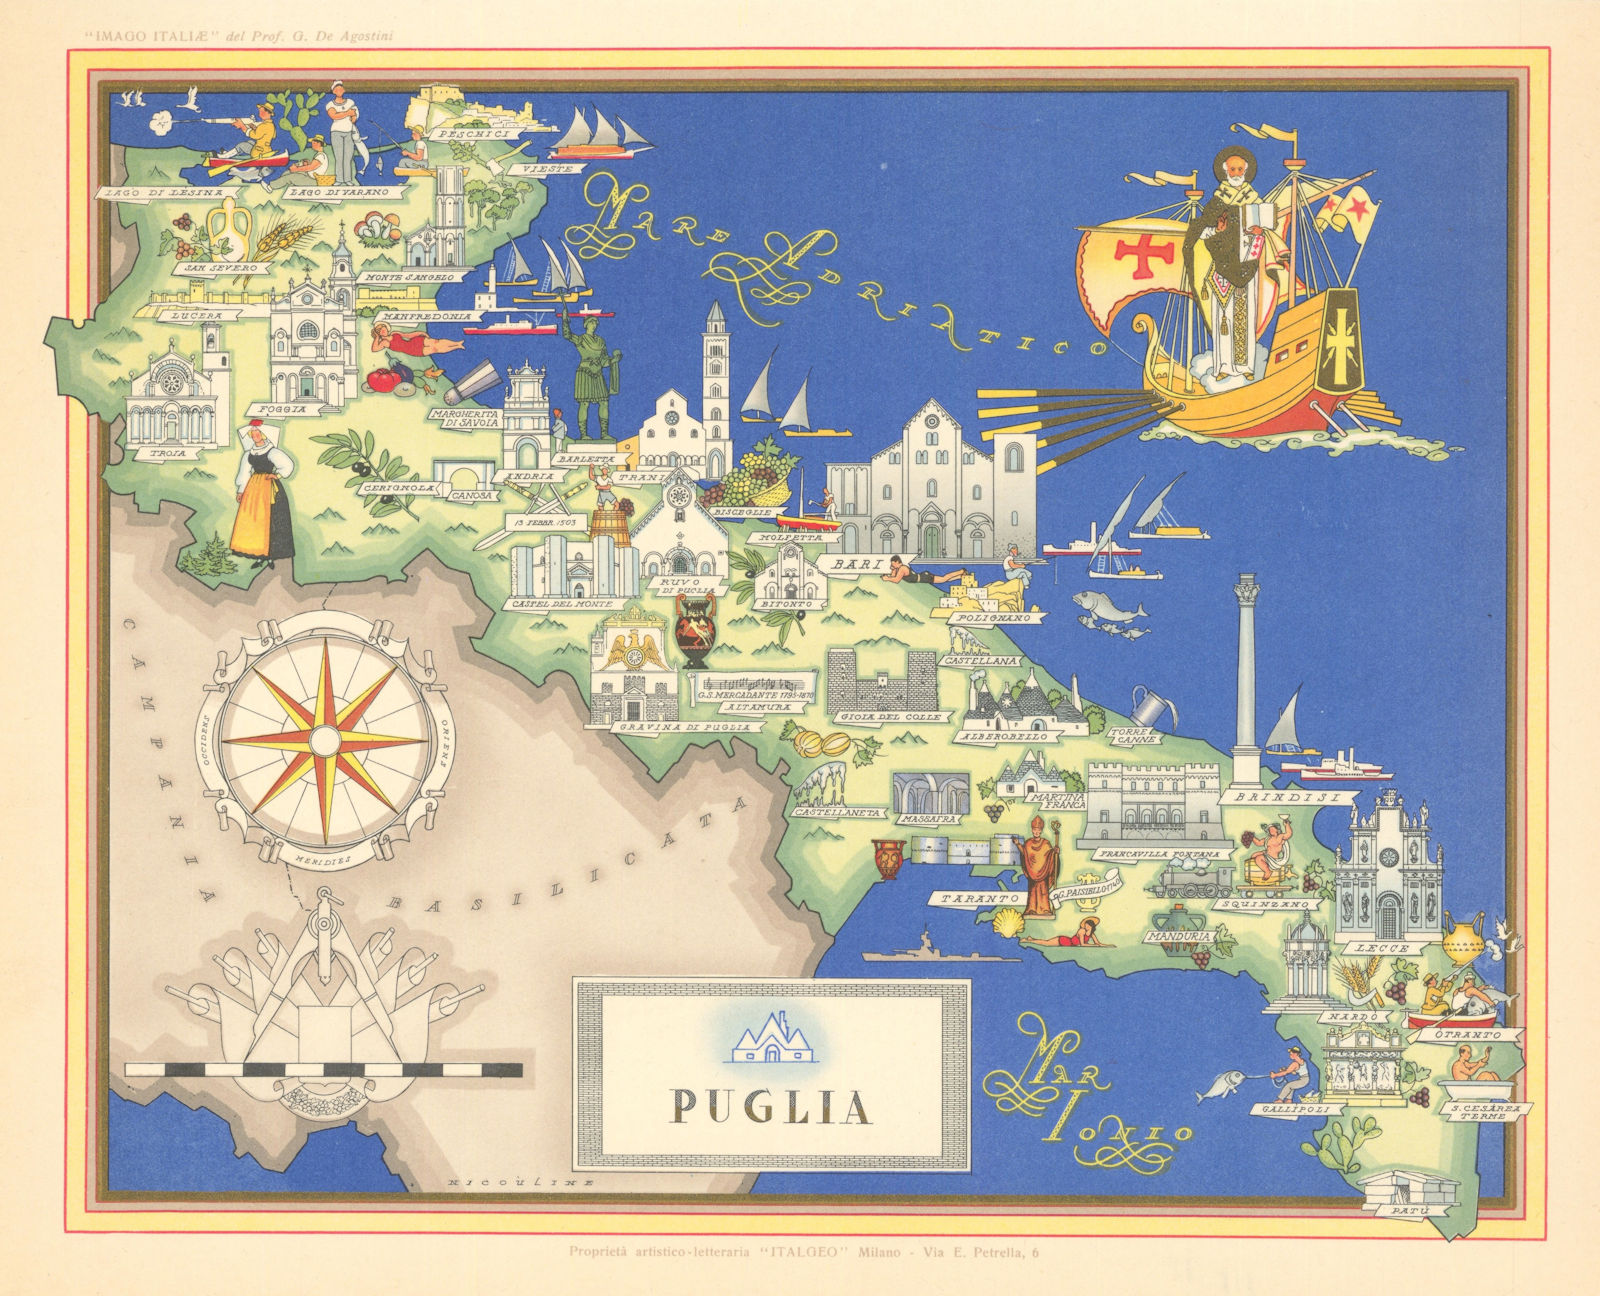 Puglia / Apulia pictorial map by Vsevolode Nicouline. Italgeo/Agostini c1950